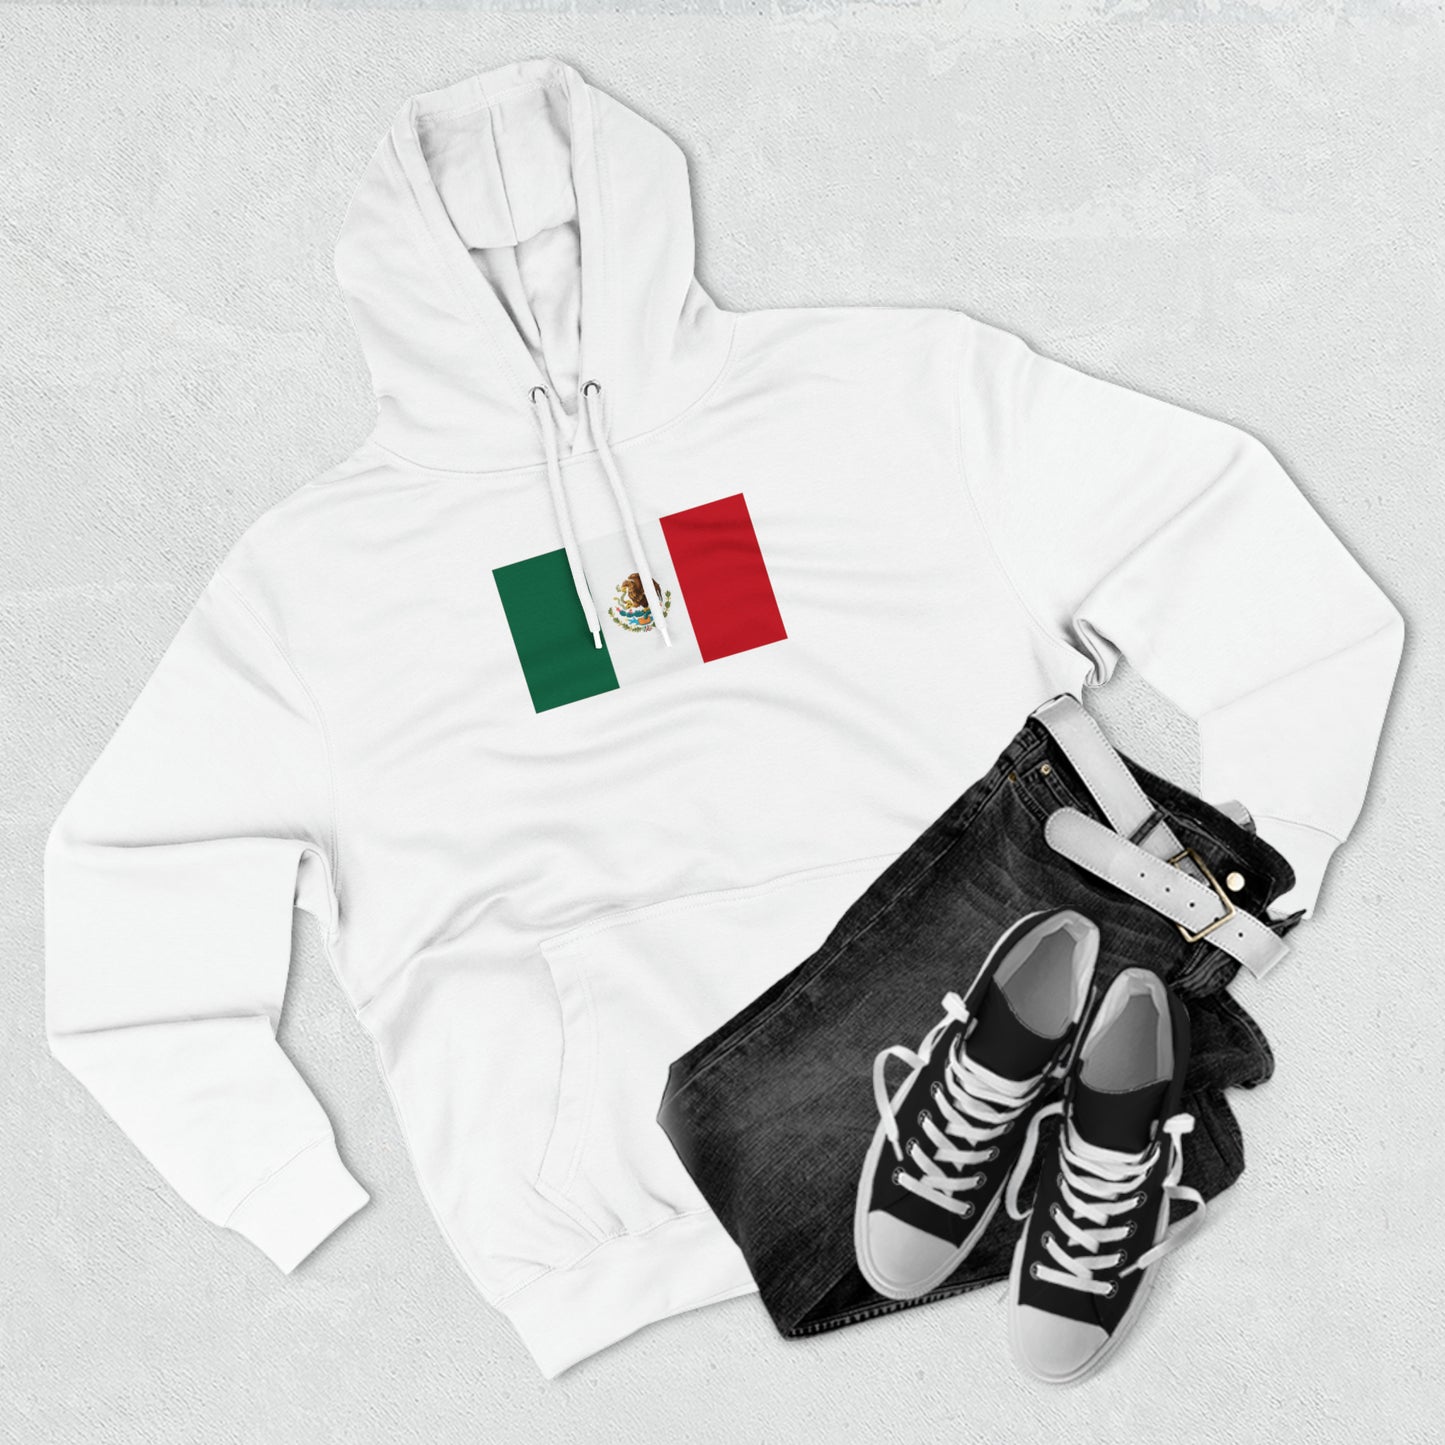 Mexican Flag, Unisex Premium Pullover Hoodie